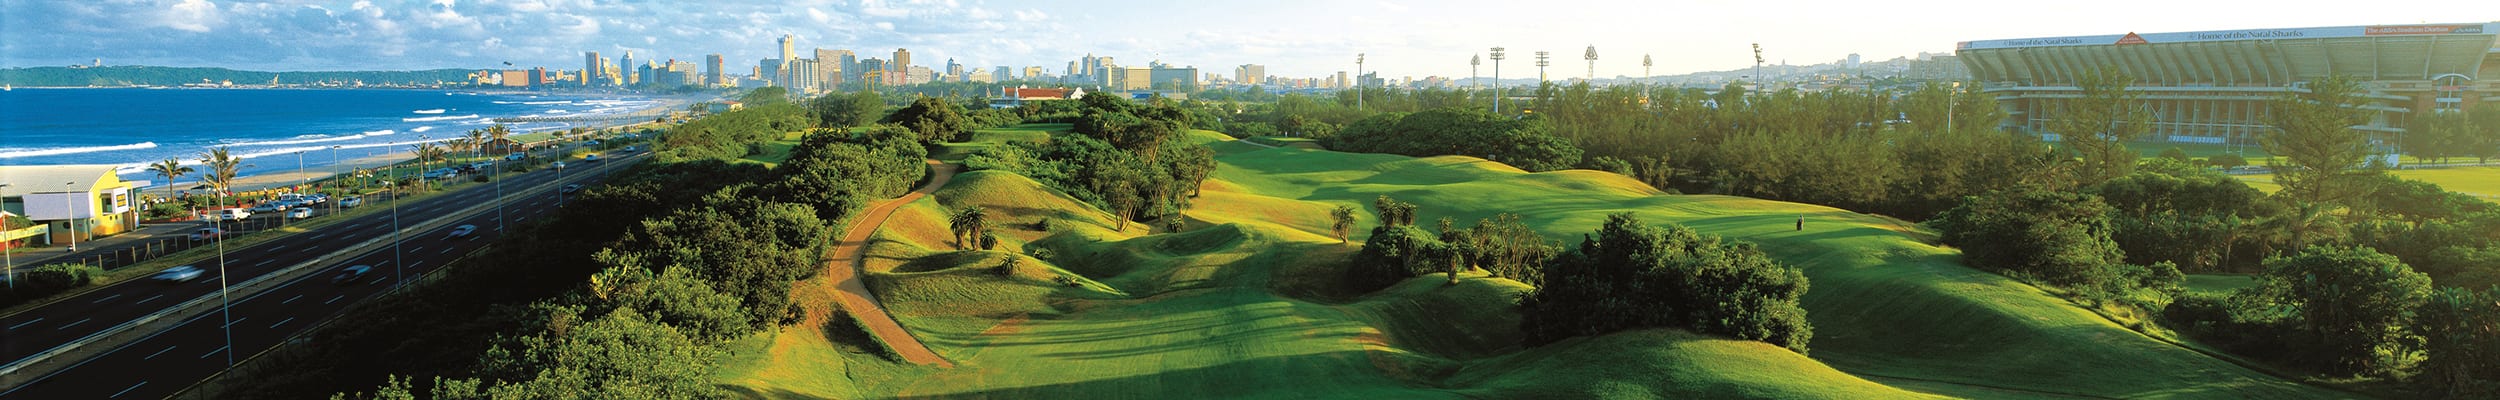 Golf Safari Courses